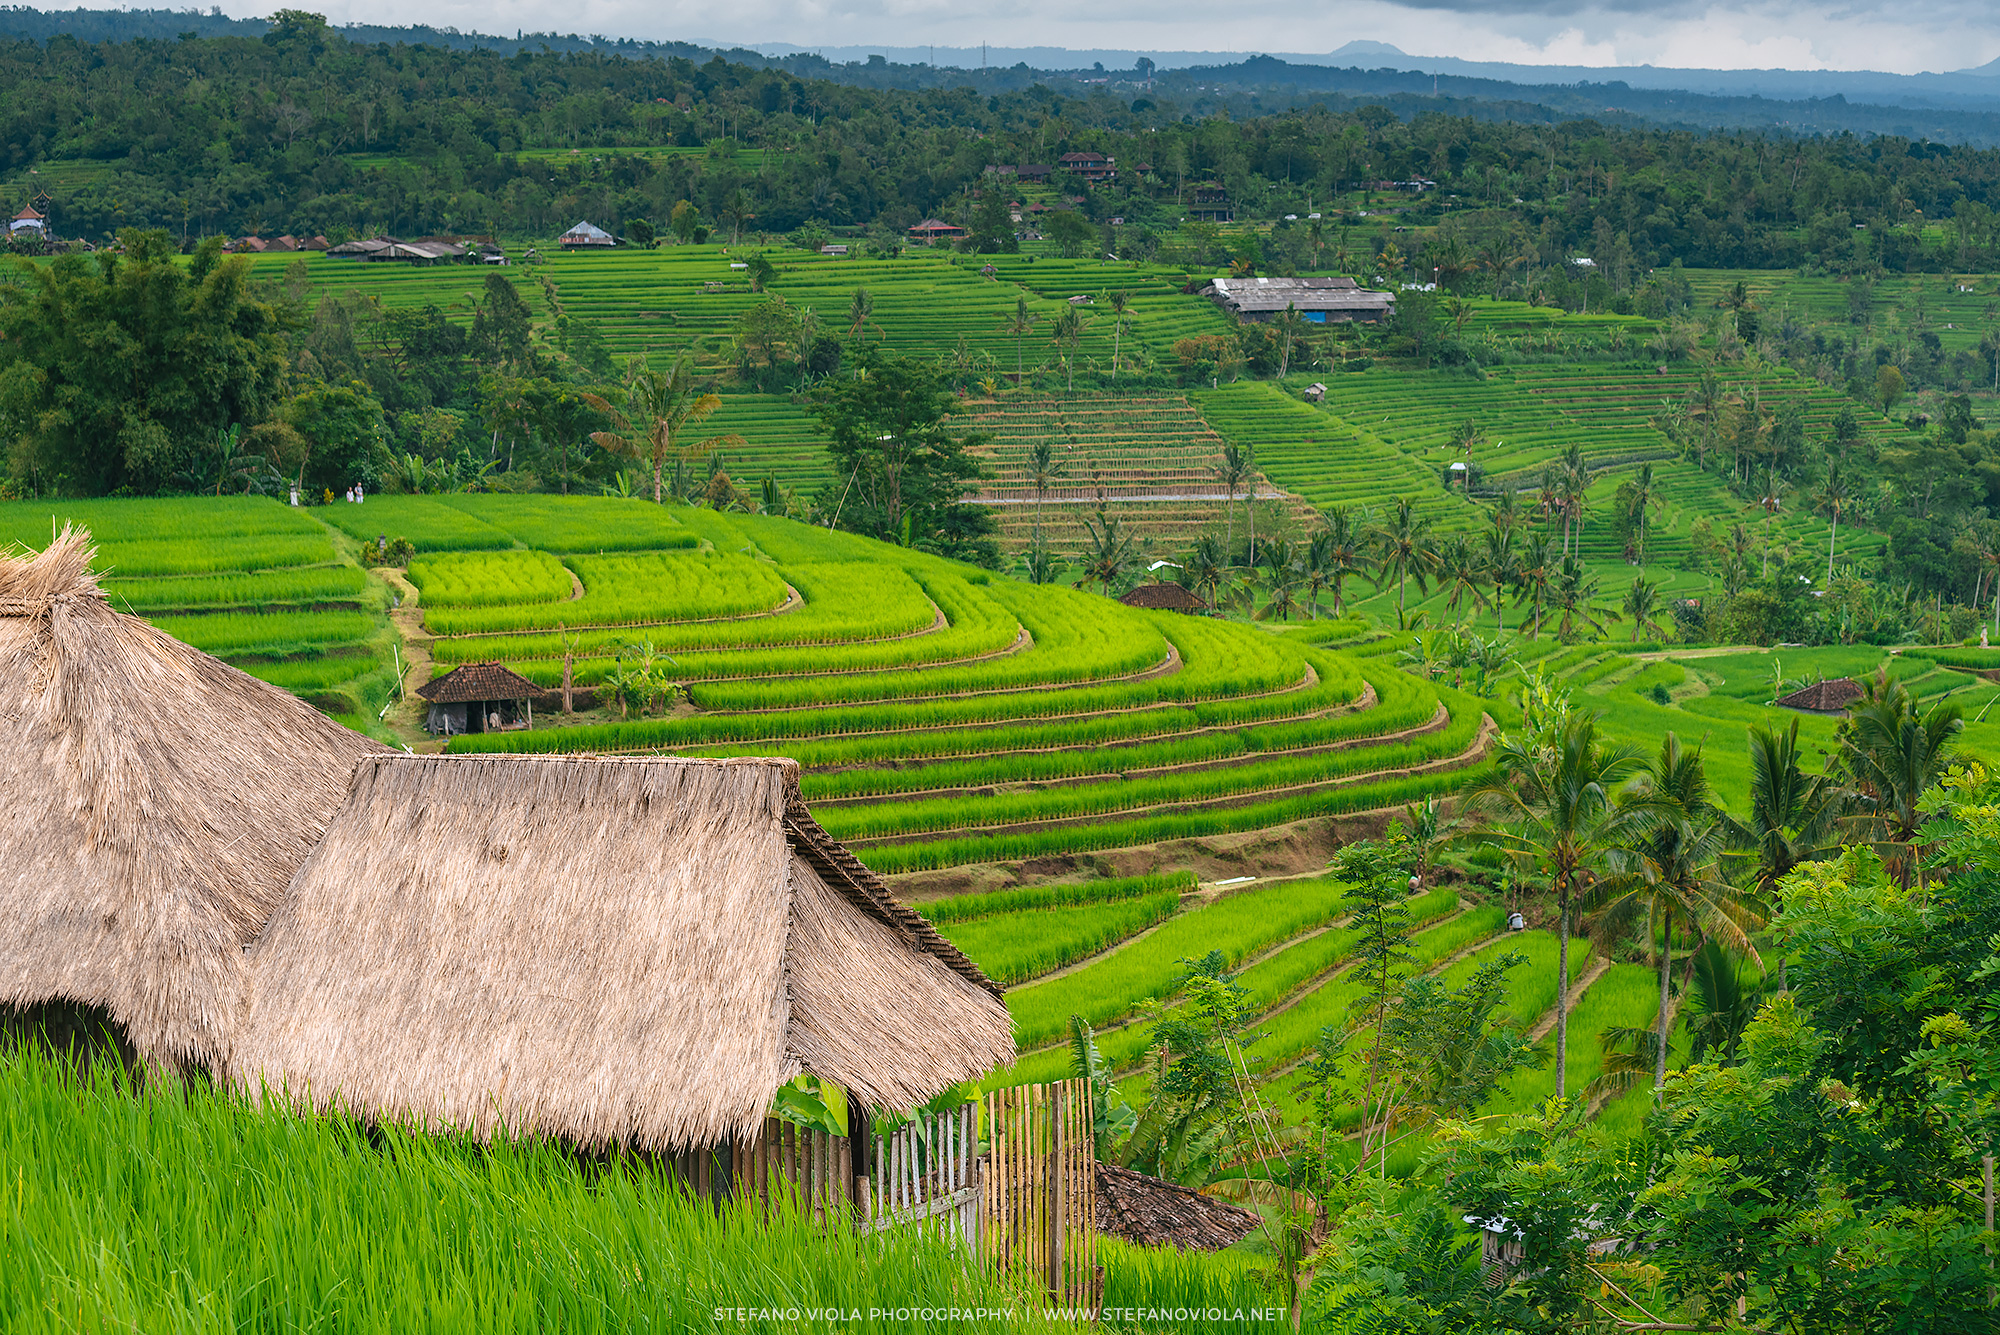 The Jatiluwih (Bali) rice terraces...